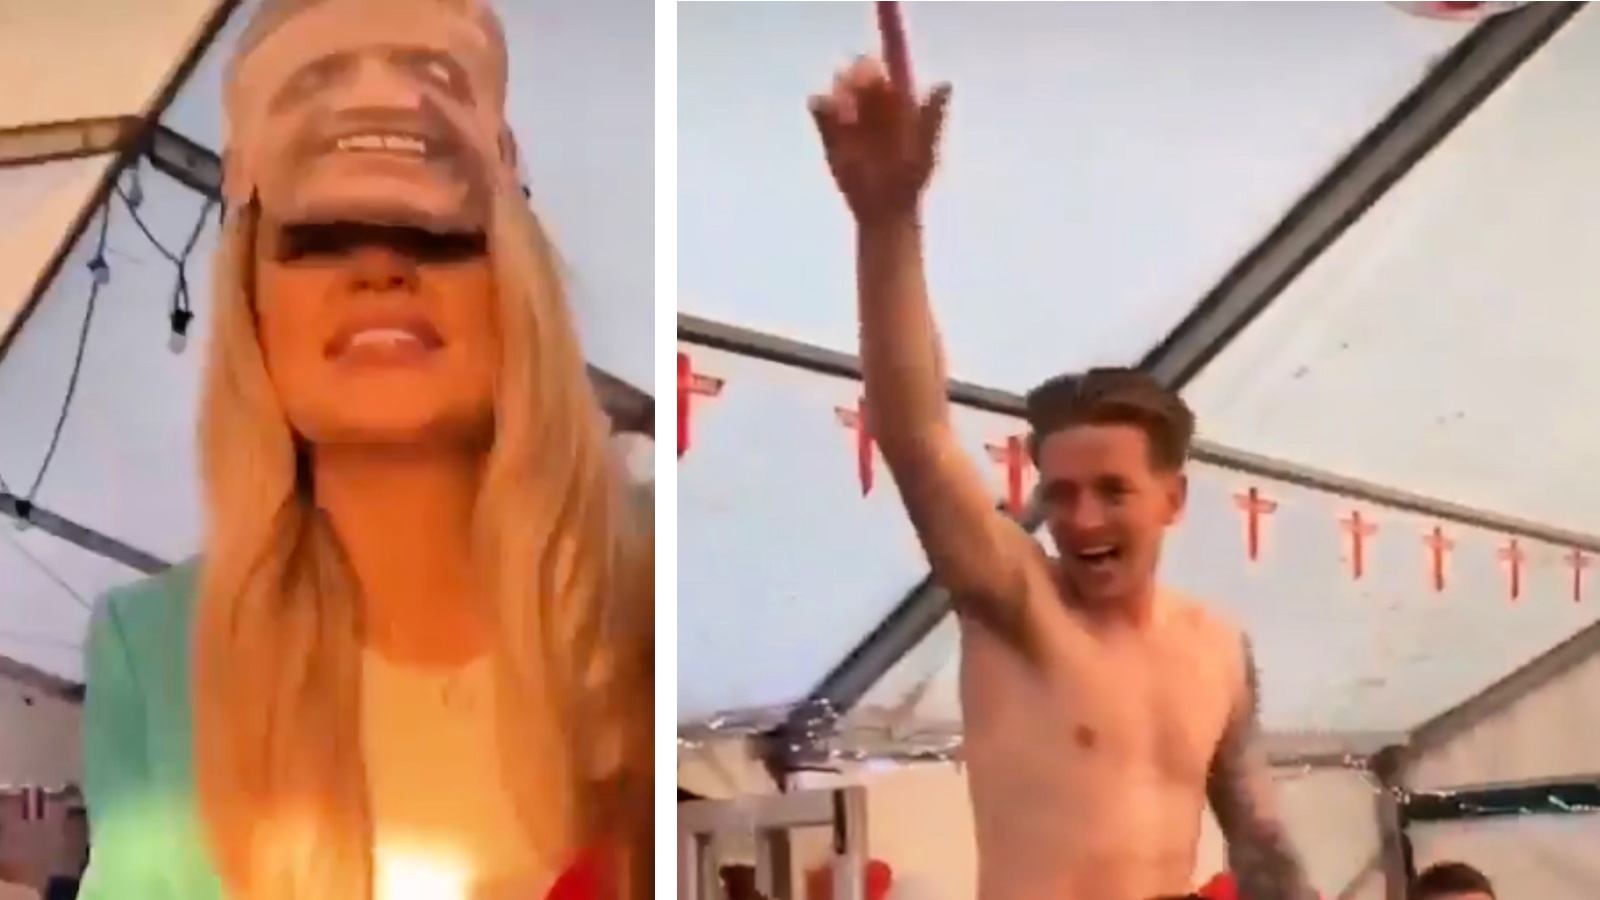 Watch: Shirtless Jordan Pickford singing Cher in wild homecoming footage